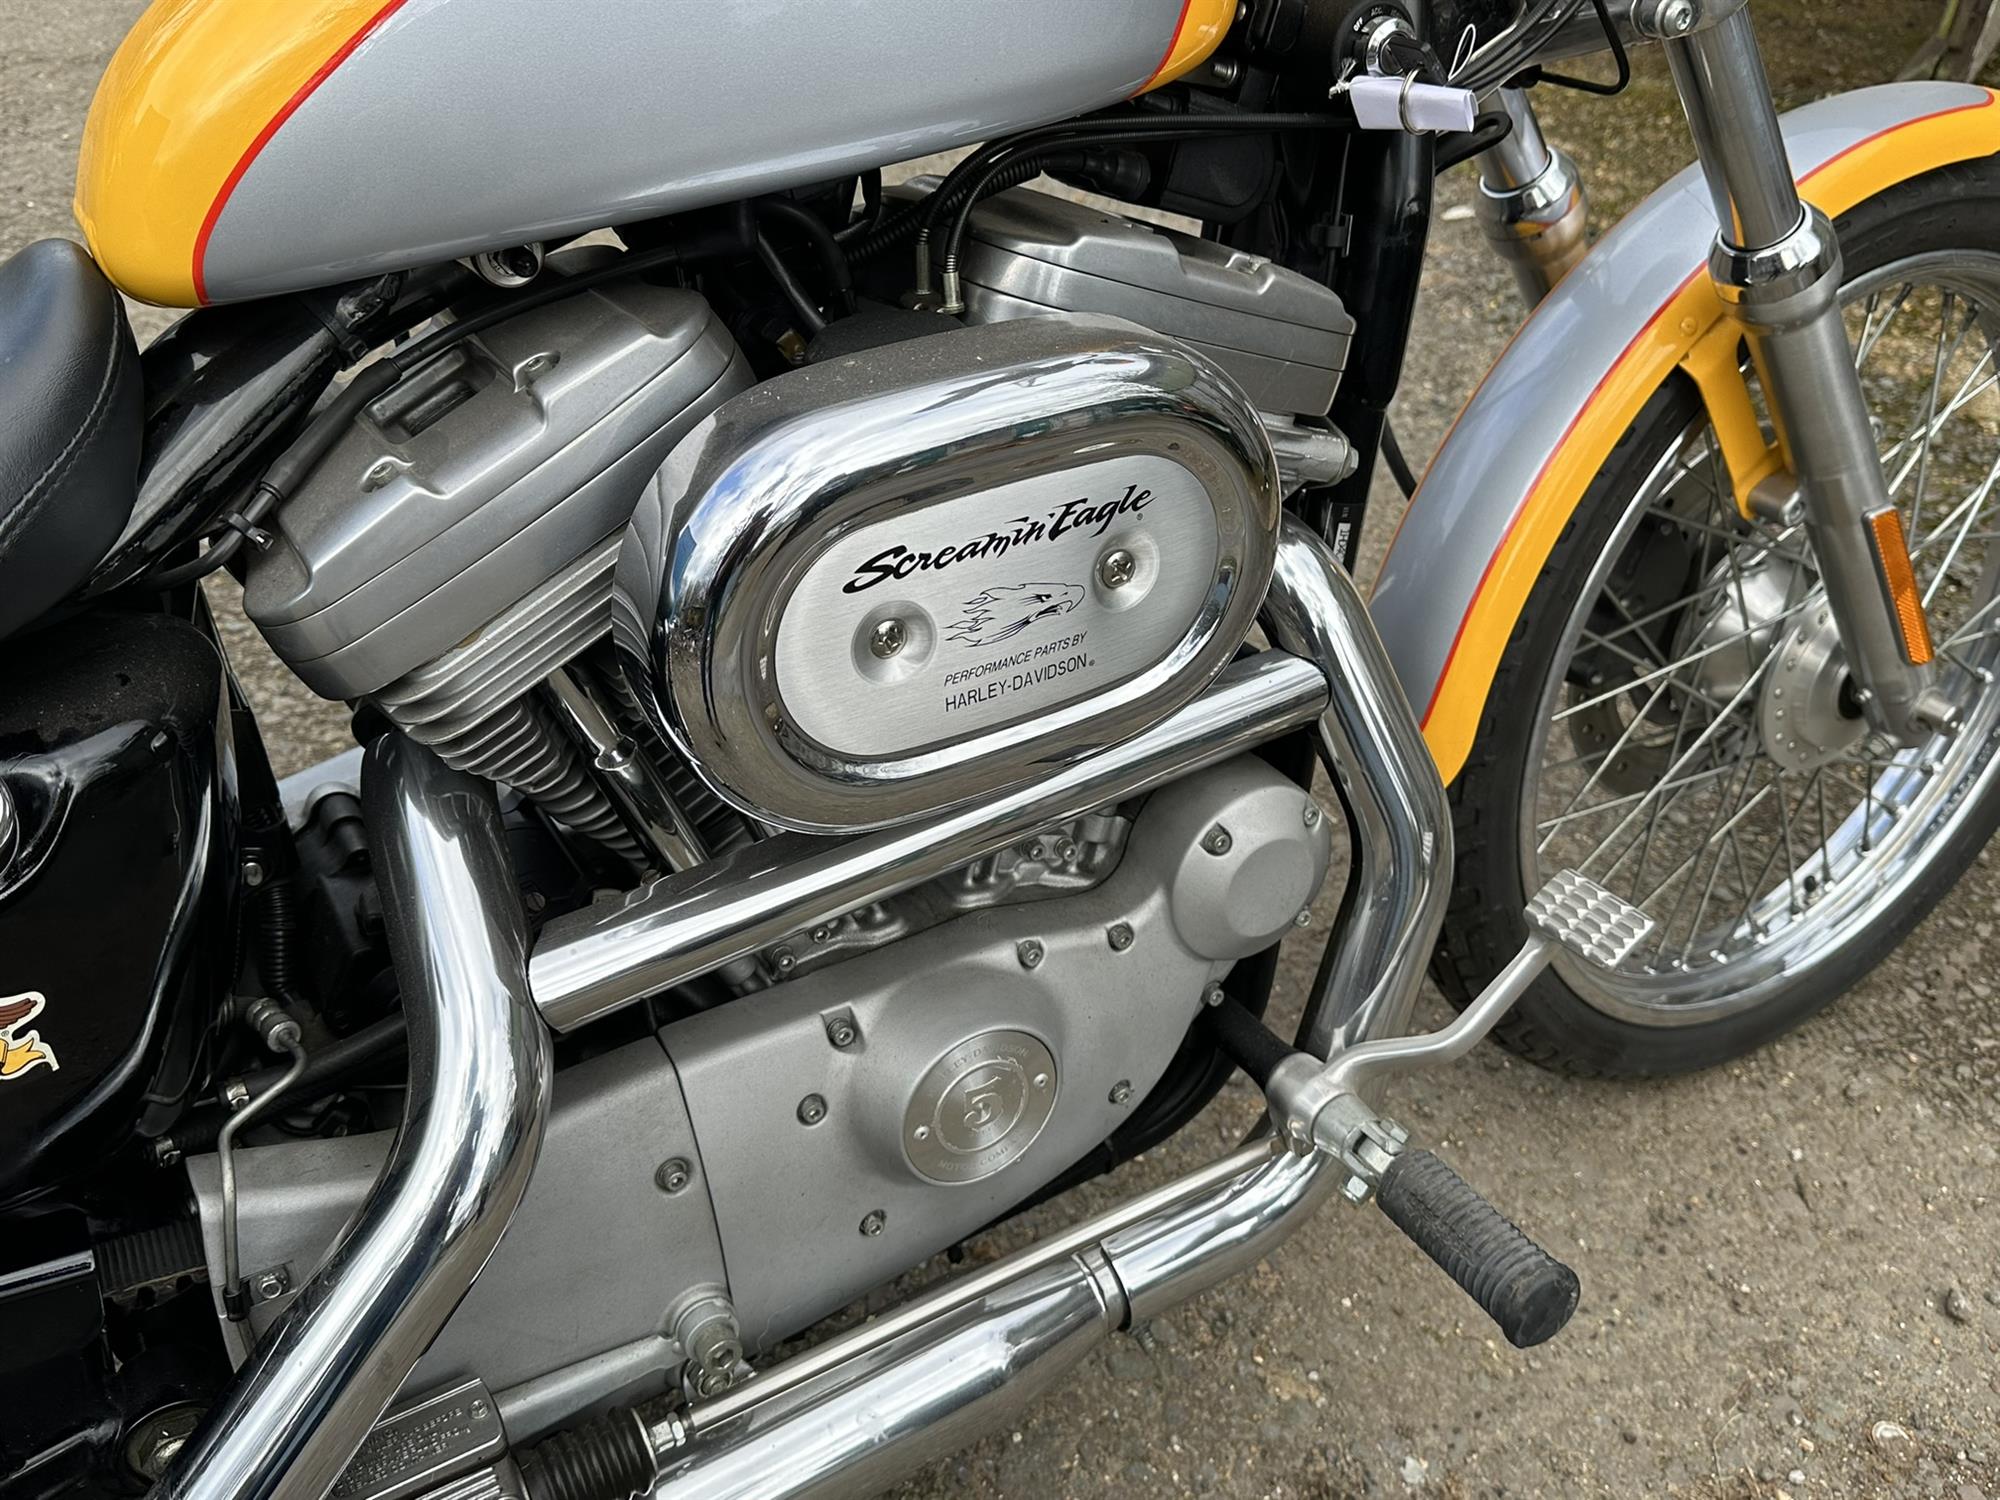 2000 Harley Davidson XL883c Sportster 883cc - Image 3 of 7